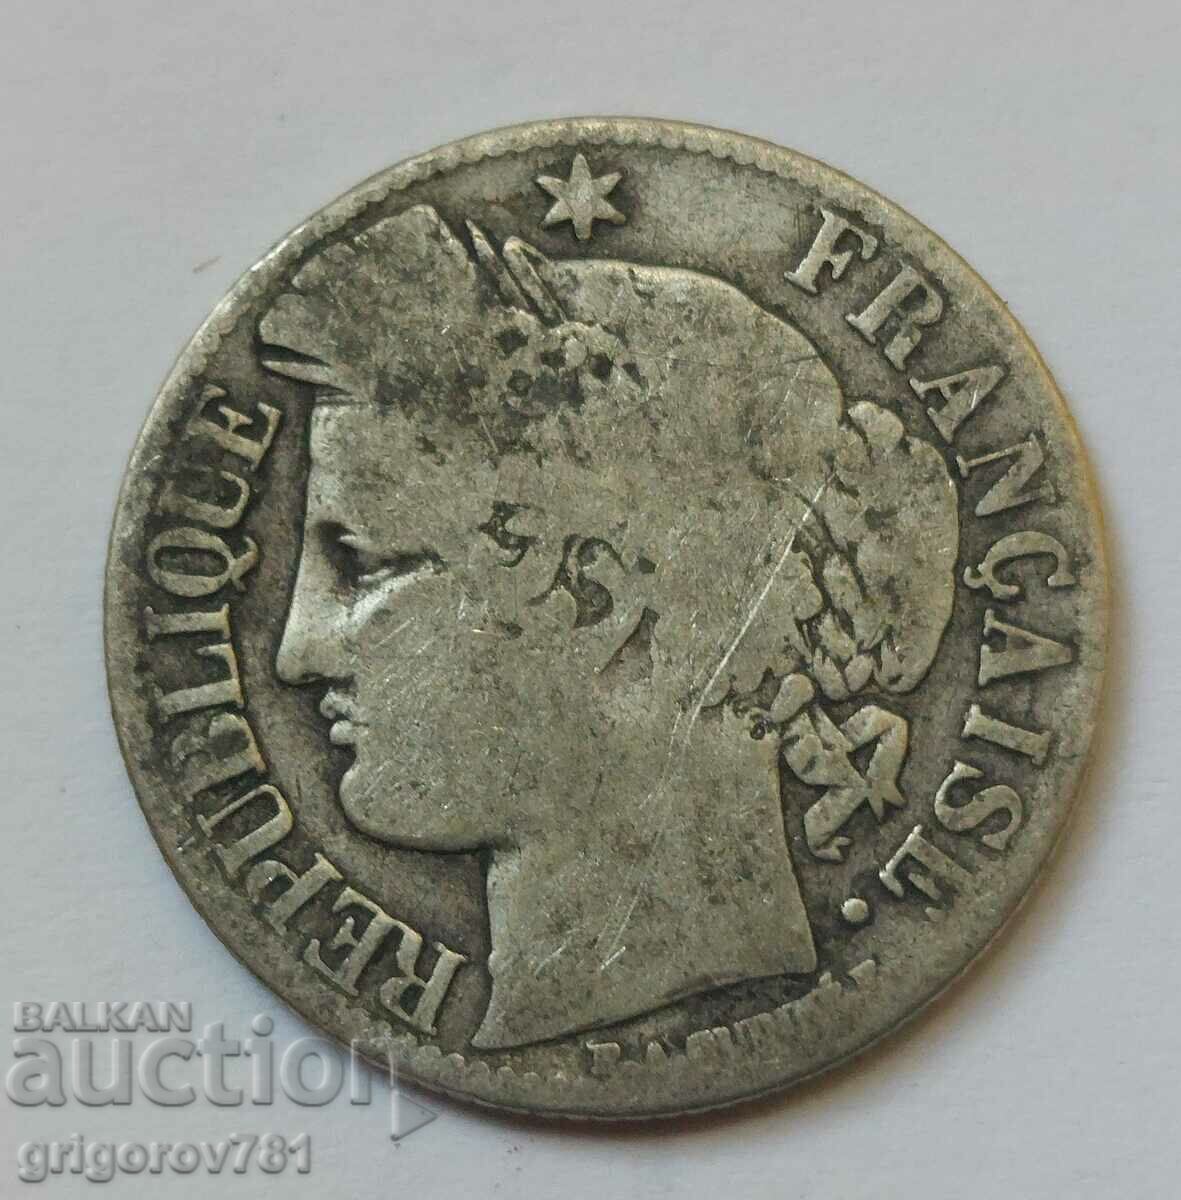 1 Franc Silver France 1871 A - Silver Coin #35